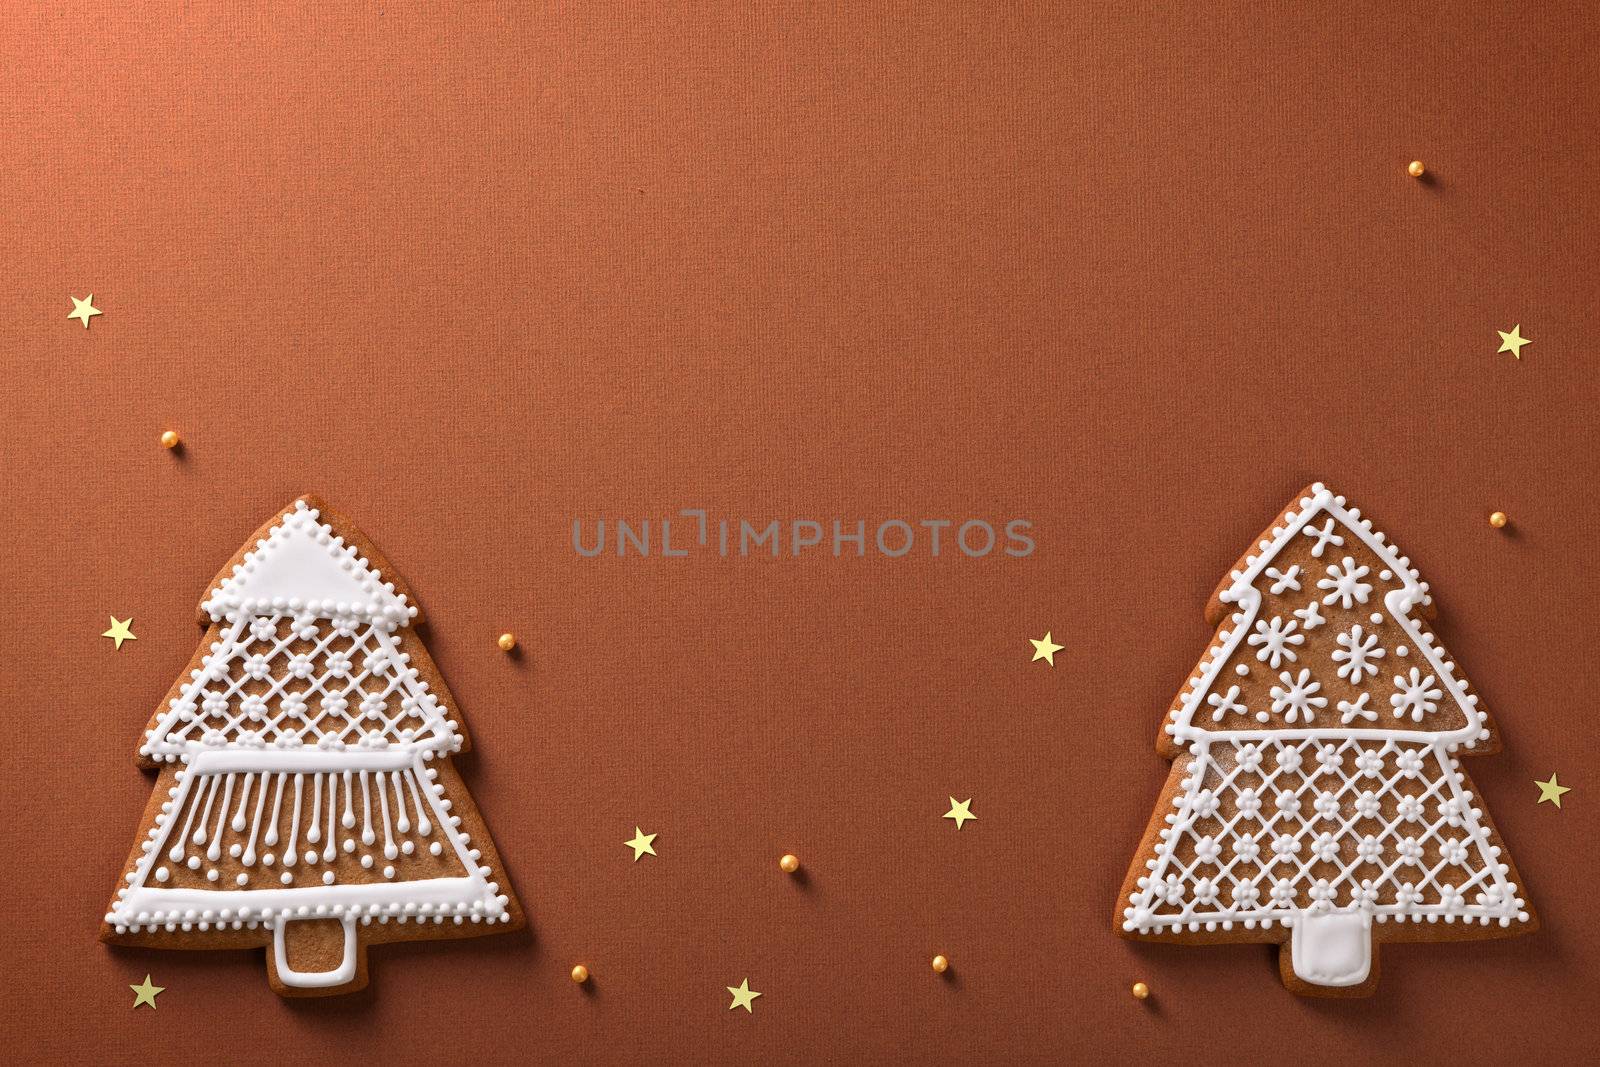 Christmas gingerbreads by bozena_fulawka